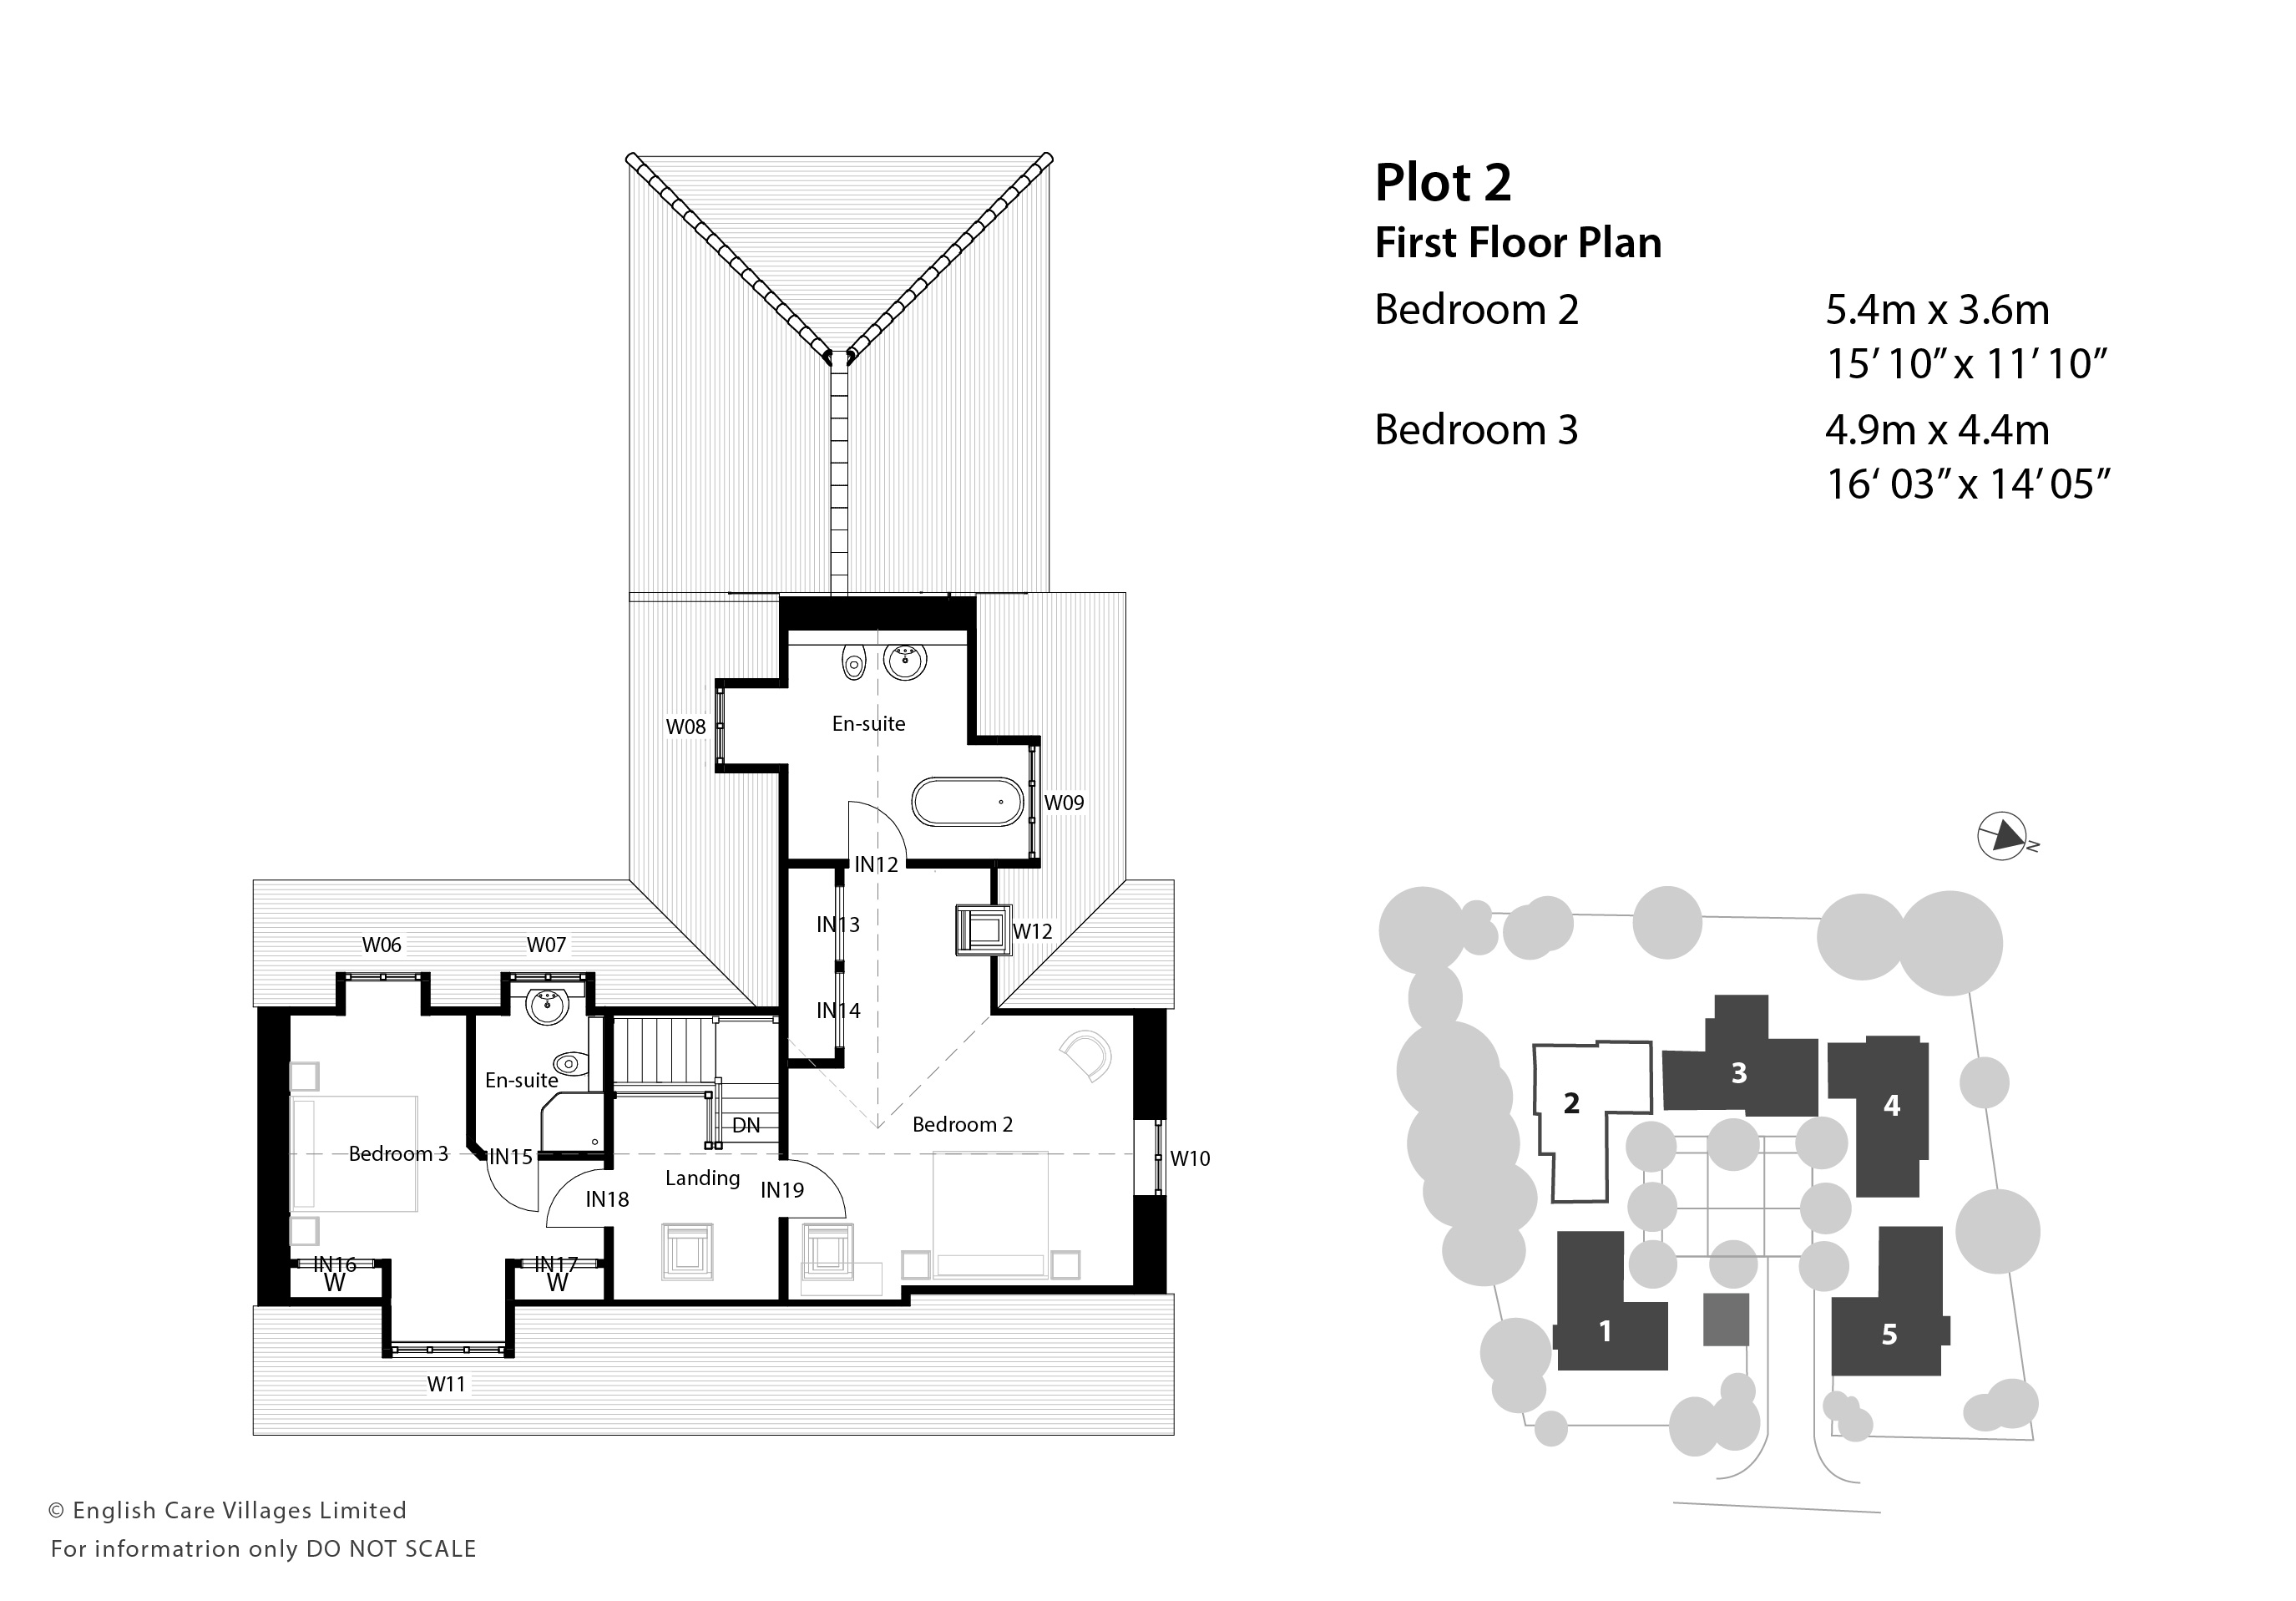 Plot 2 First Floor Plans